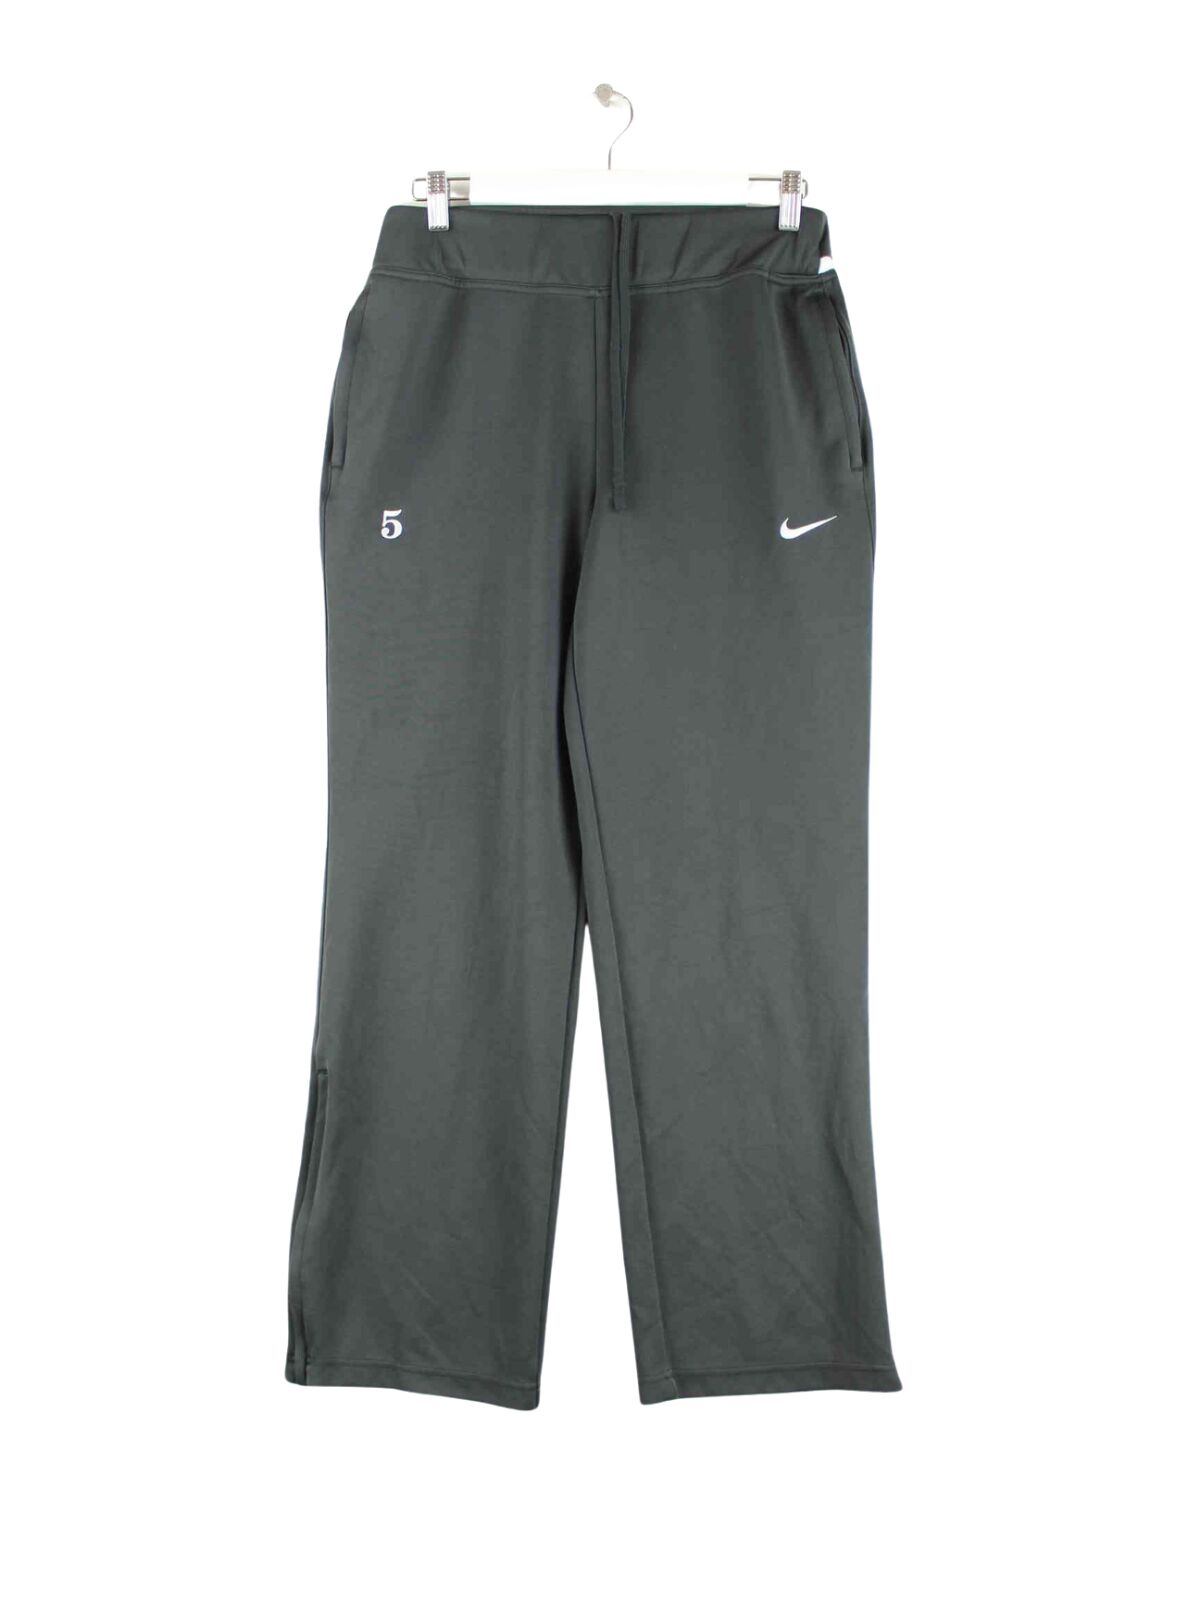 Nike Track Pants Grau S (front image)